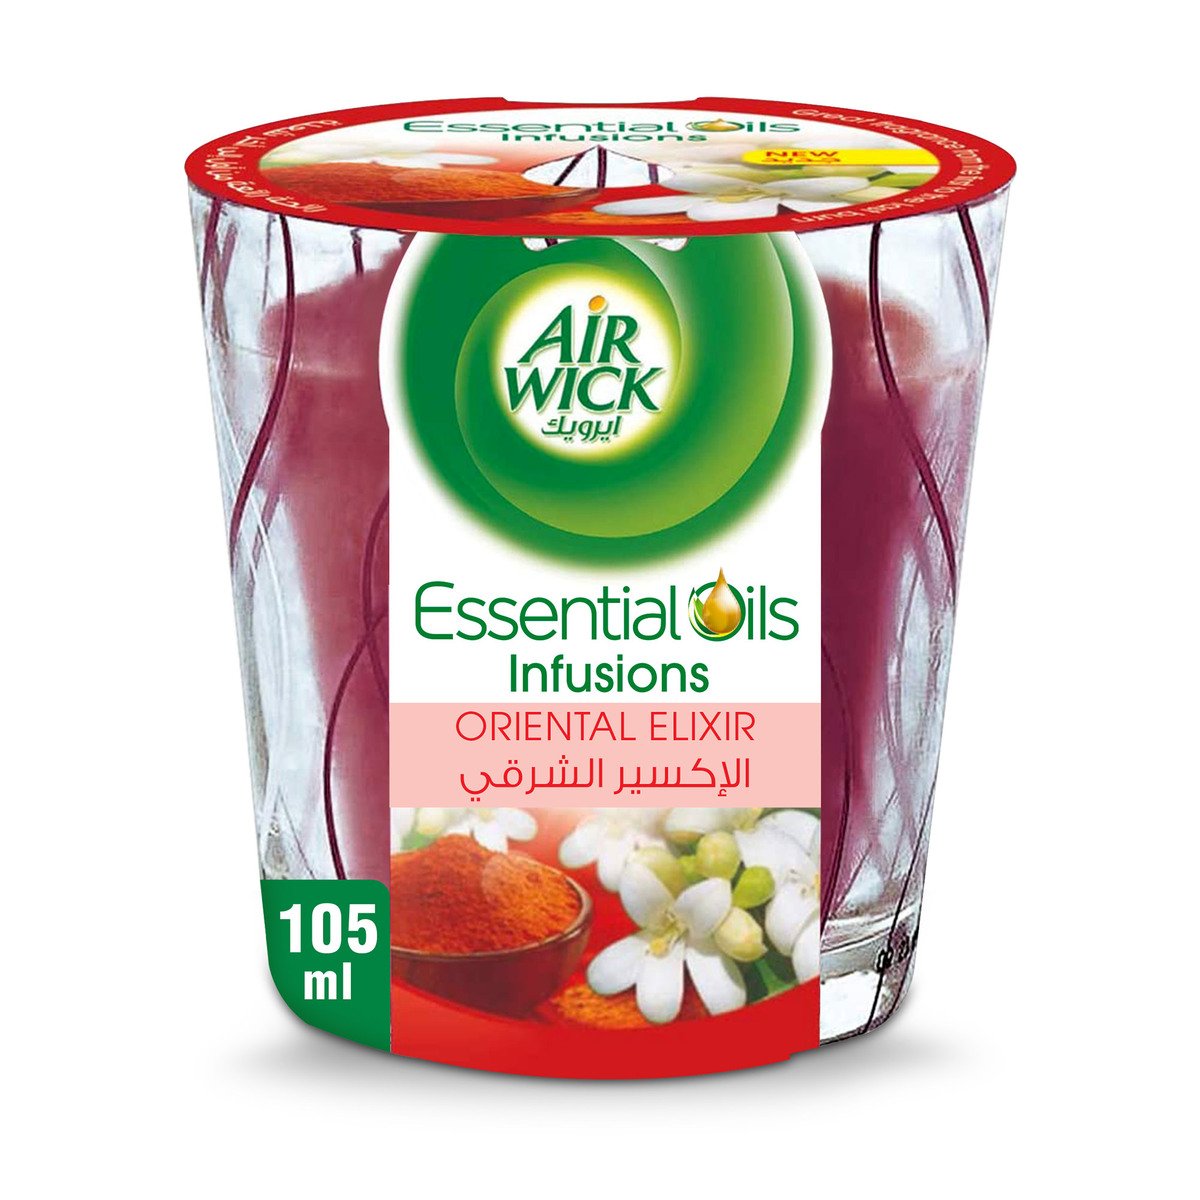 Airwick Oriental Elixir Candle 105 ml